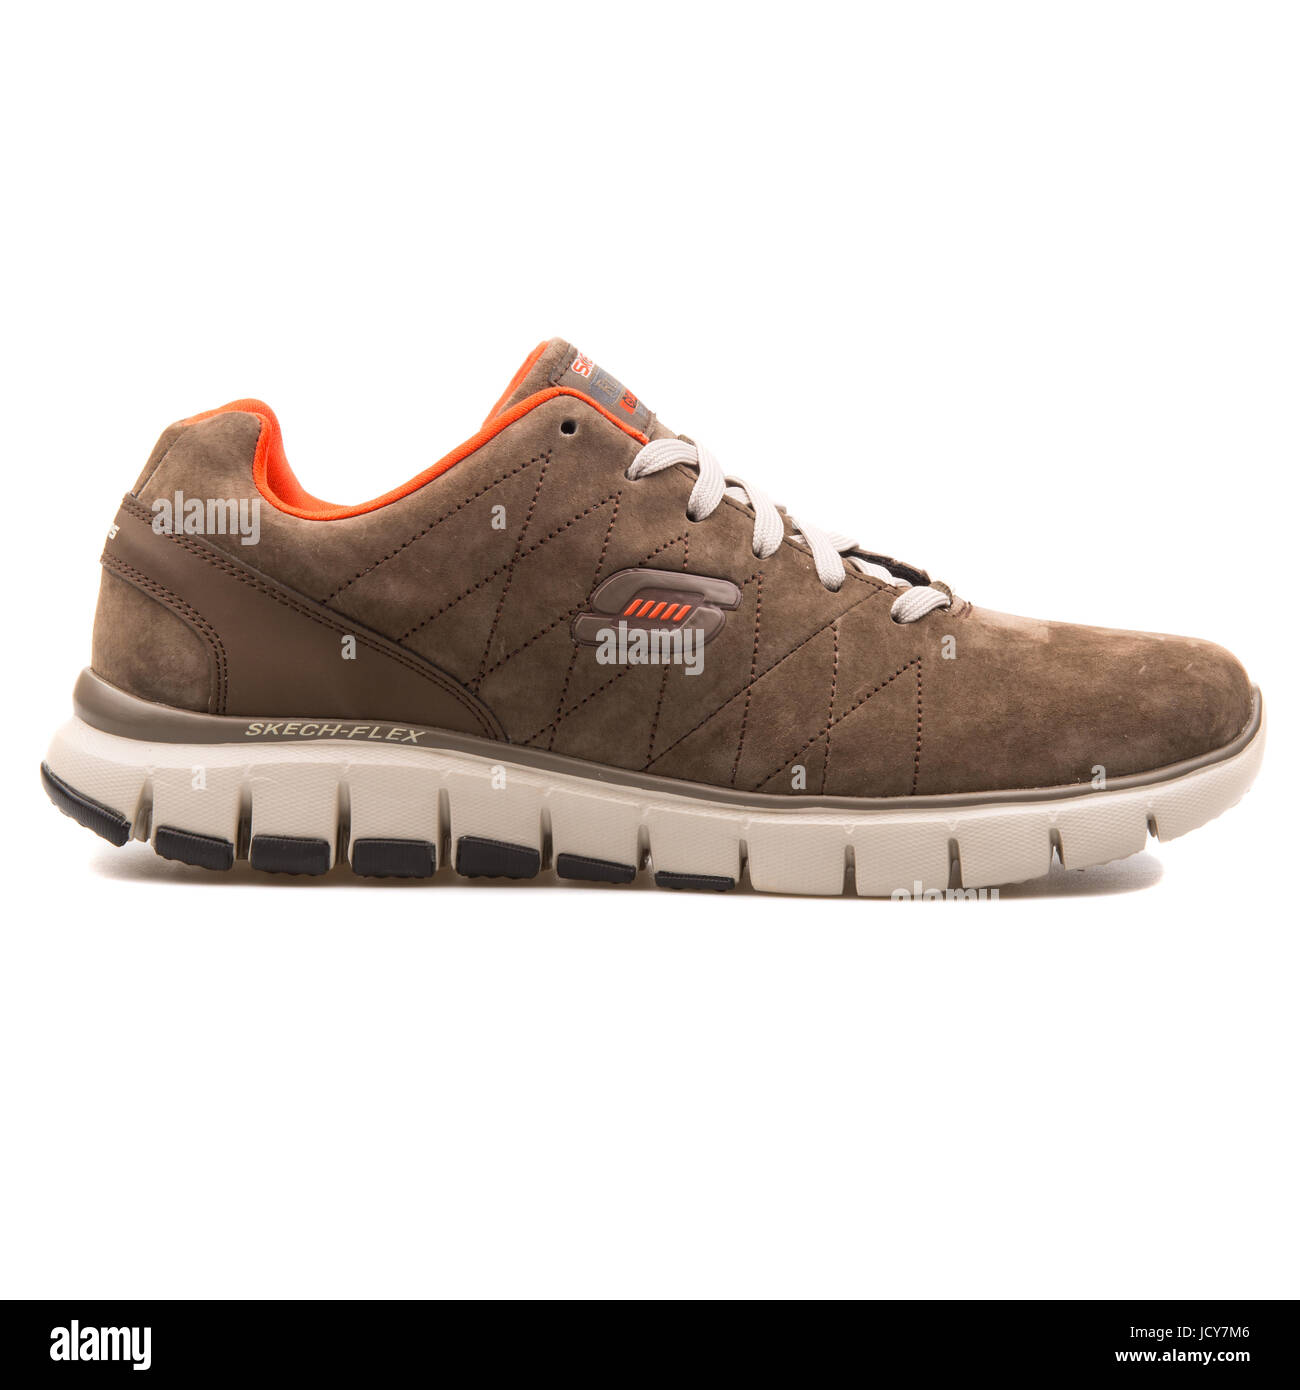 Skechers Skech-Flex Natural Vigor Brown and Orange Men's Running Shoes -  999668-BROR Stock Photo - Alamy